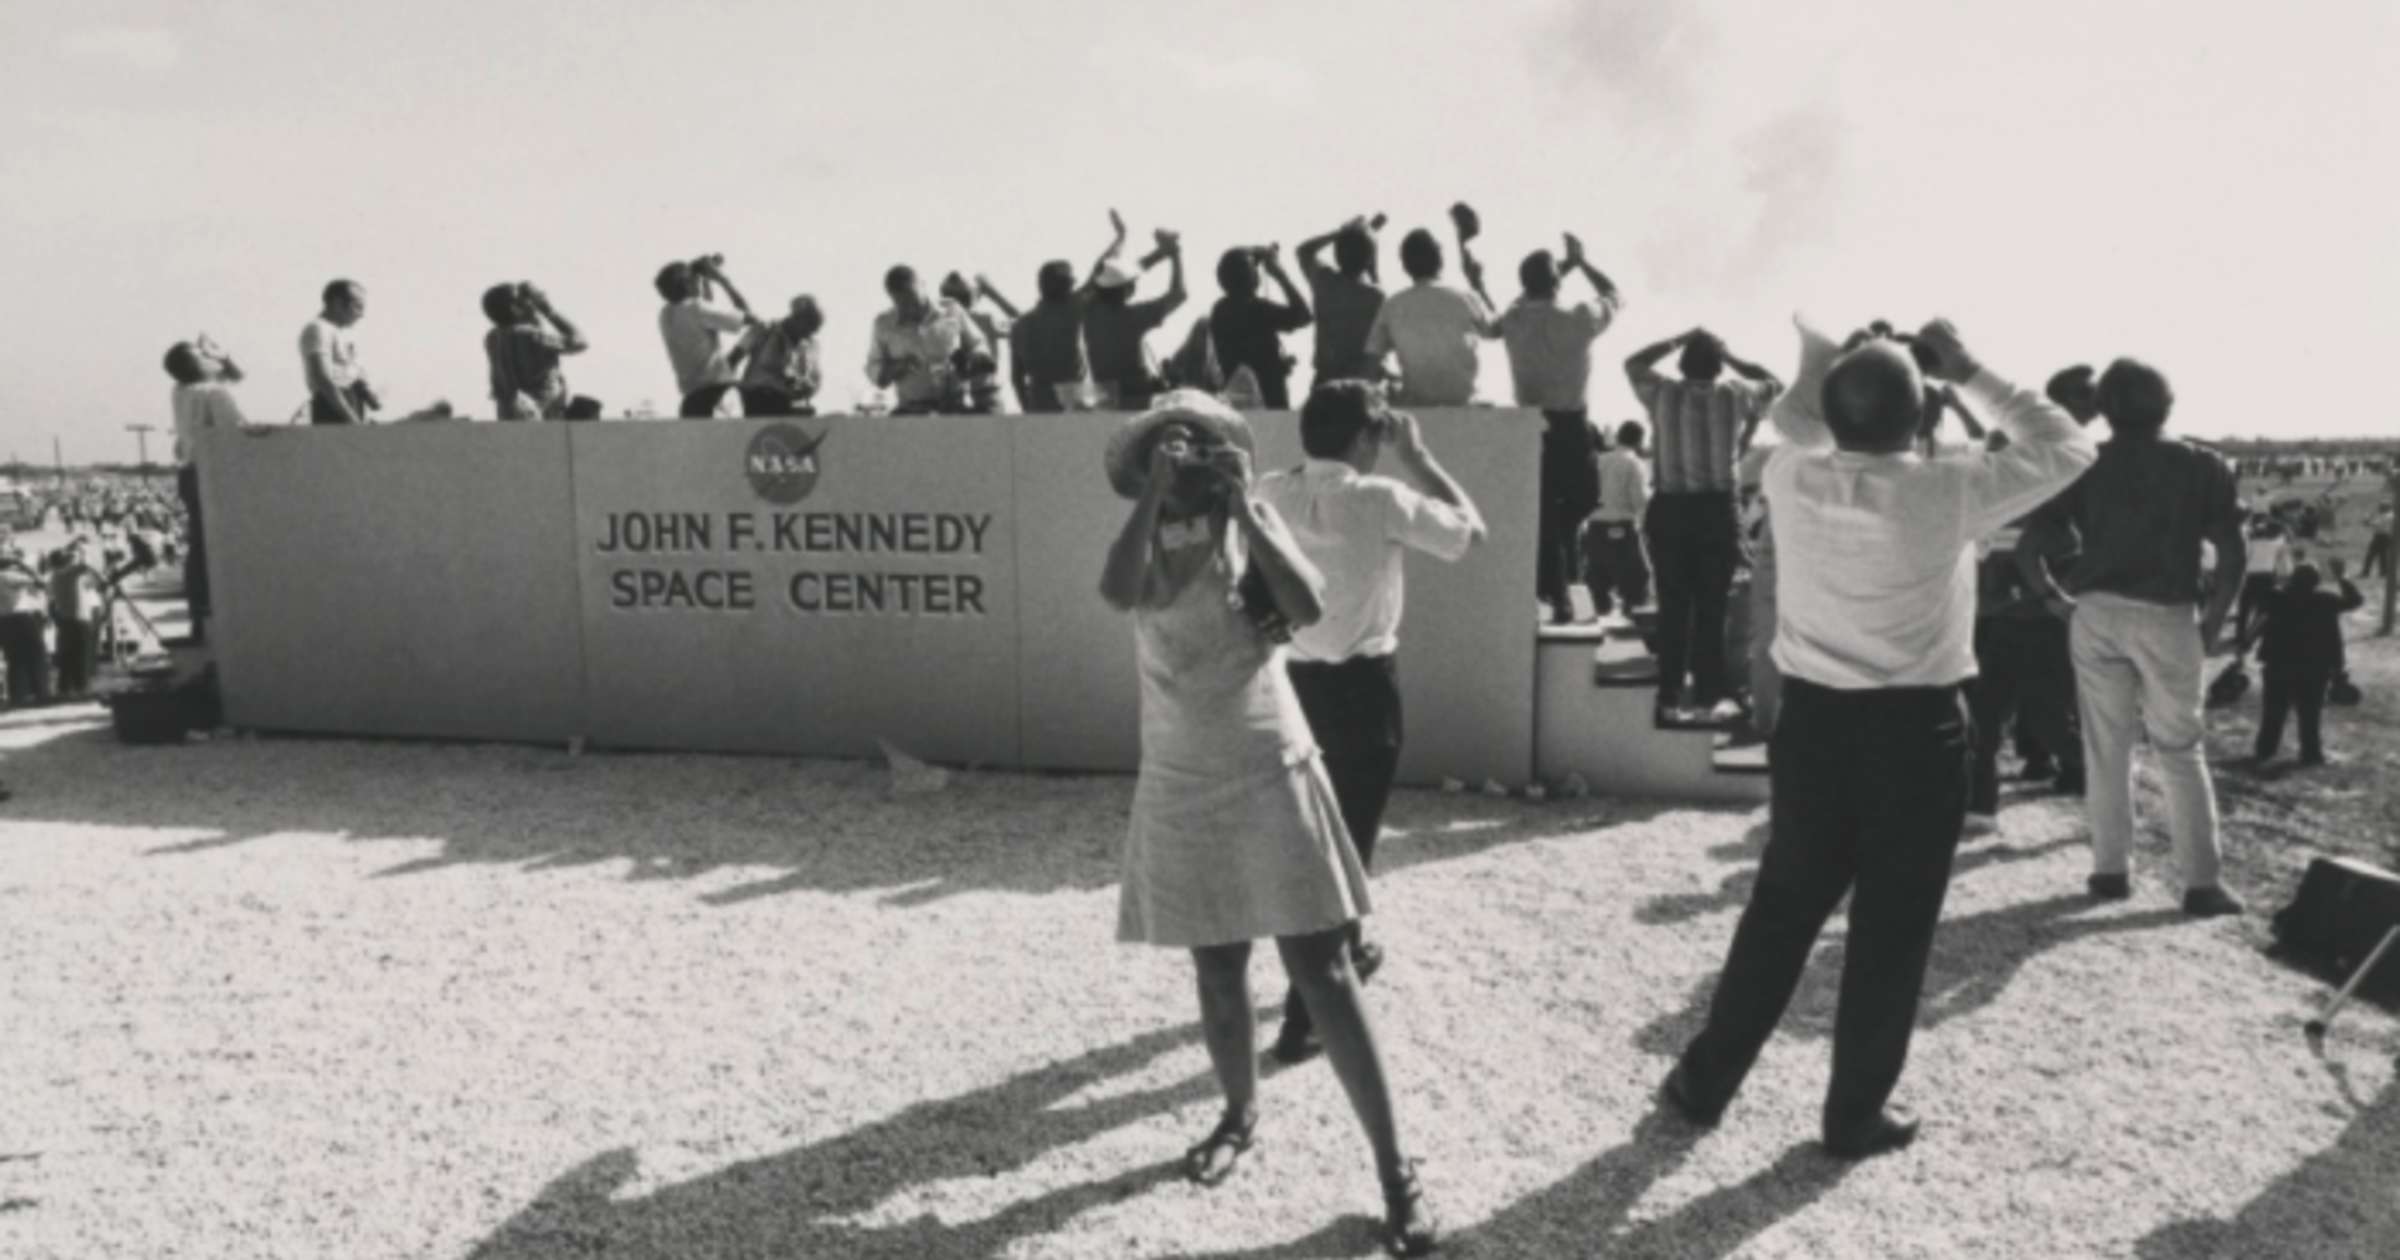 Garry Winogrand, Cape Kennedy, Florida (Apollo 11 Moon shot